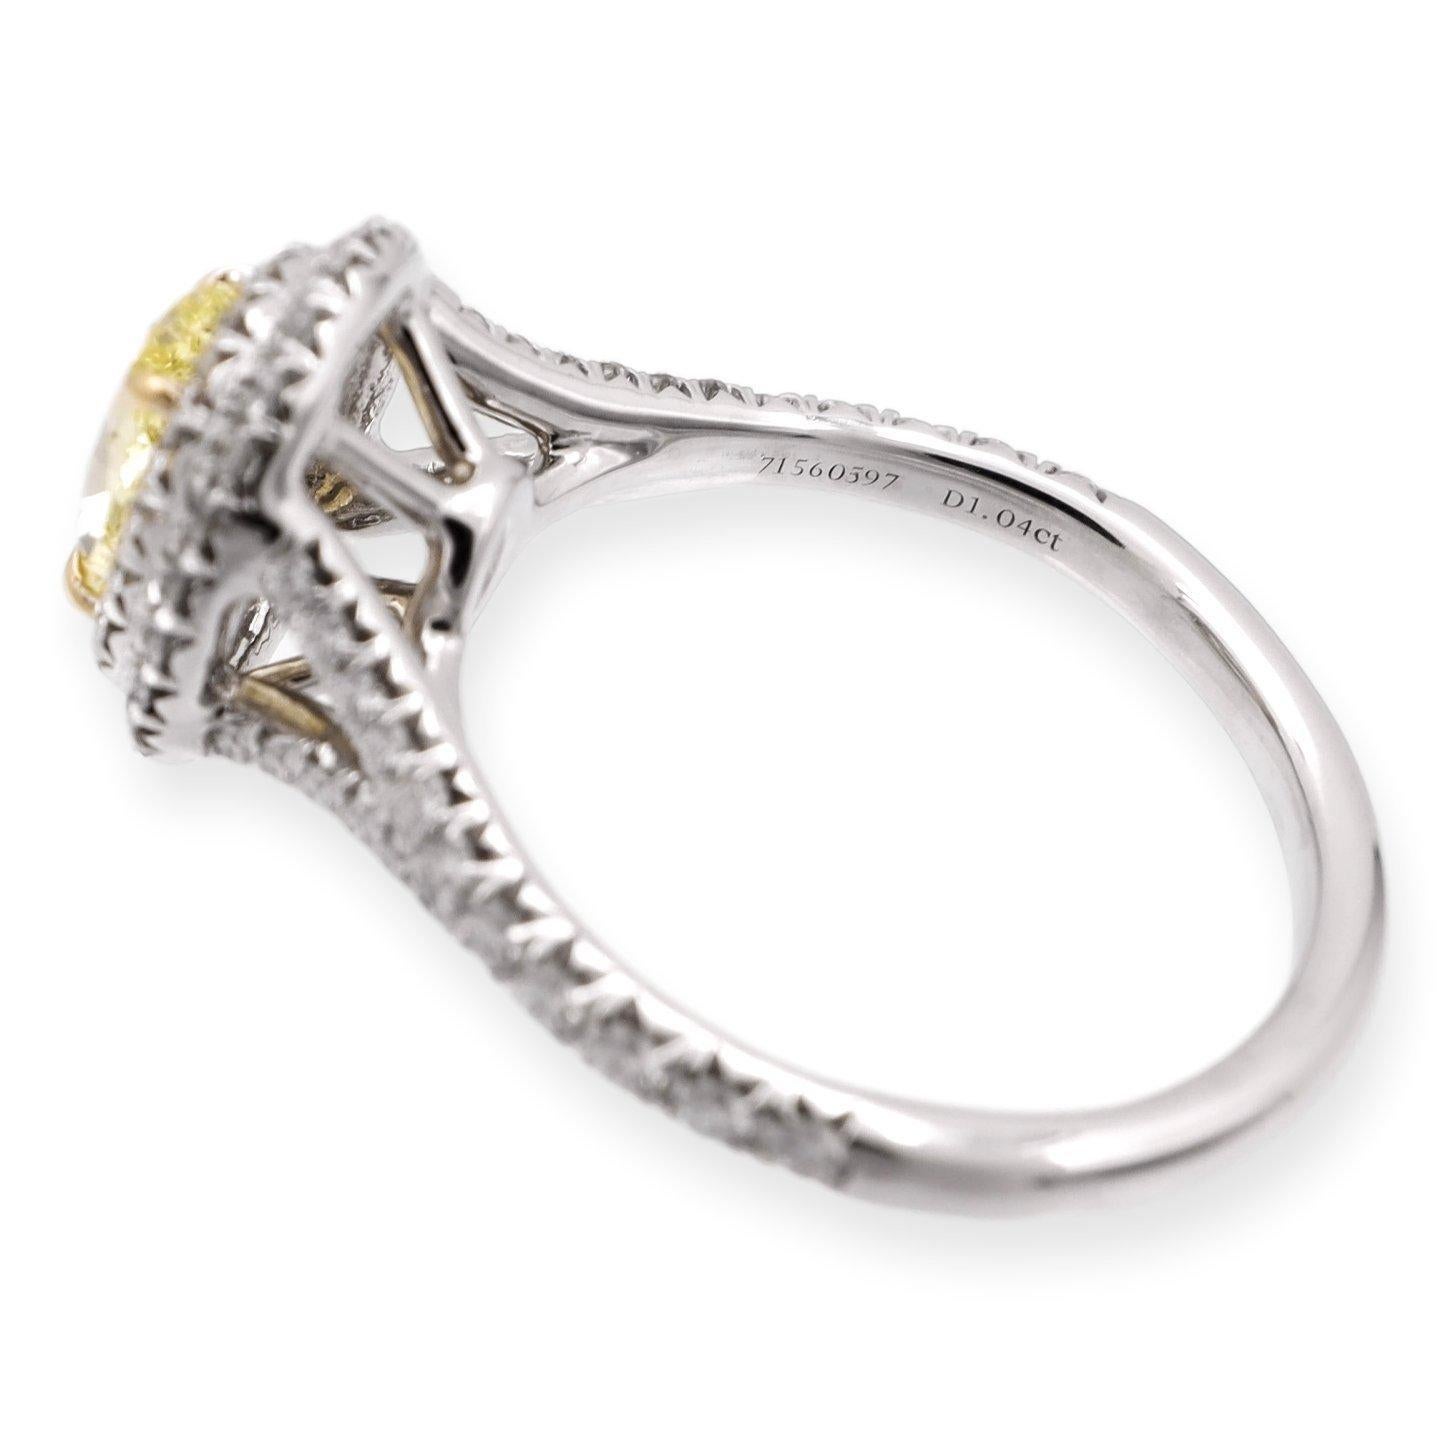 tiffany oval yellow diamond ring